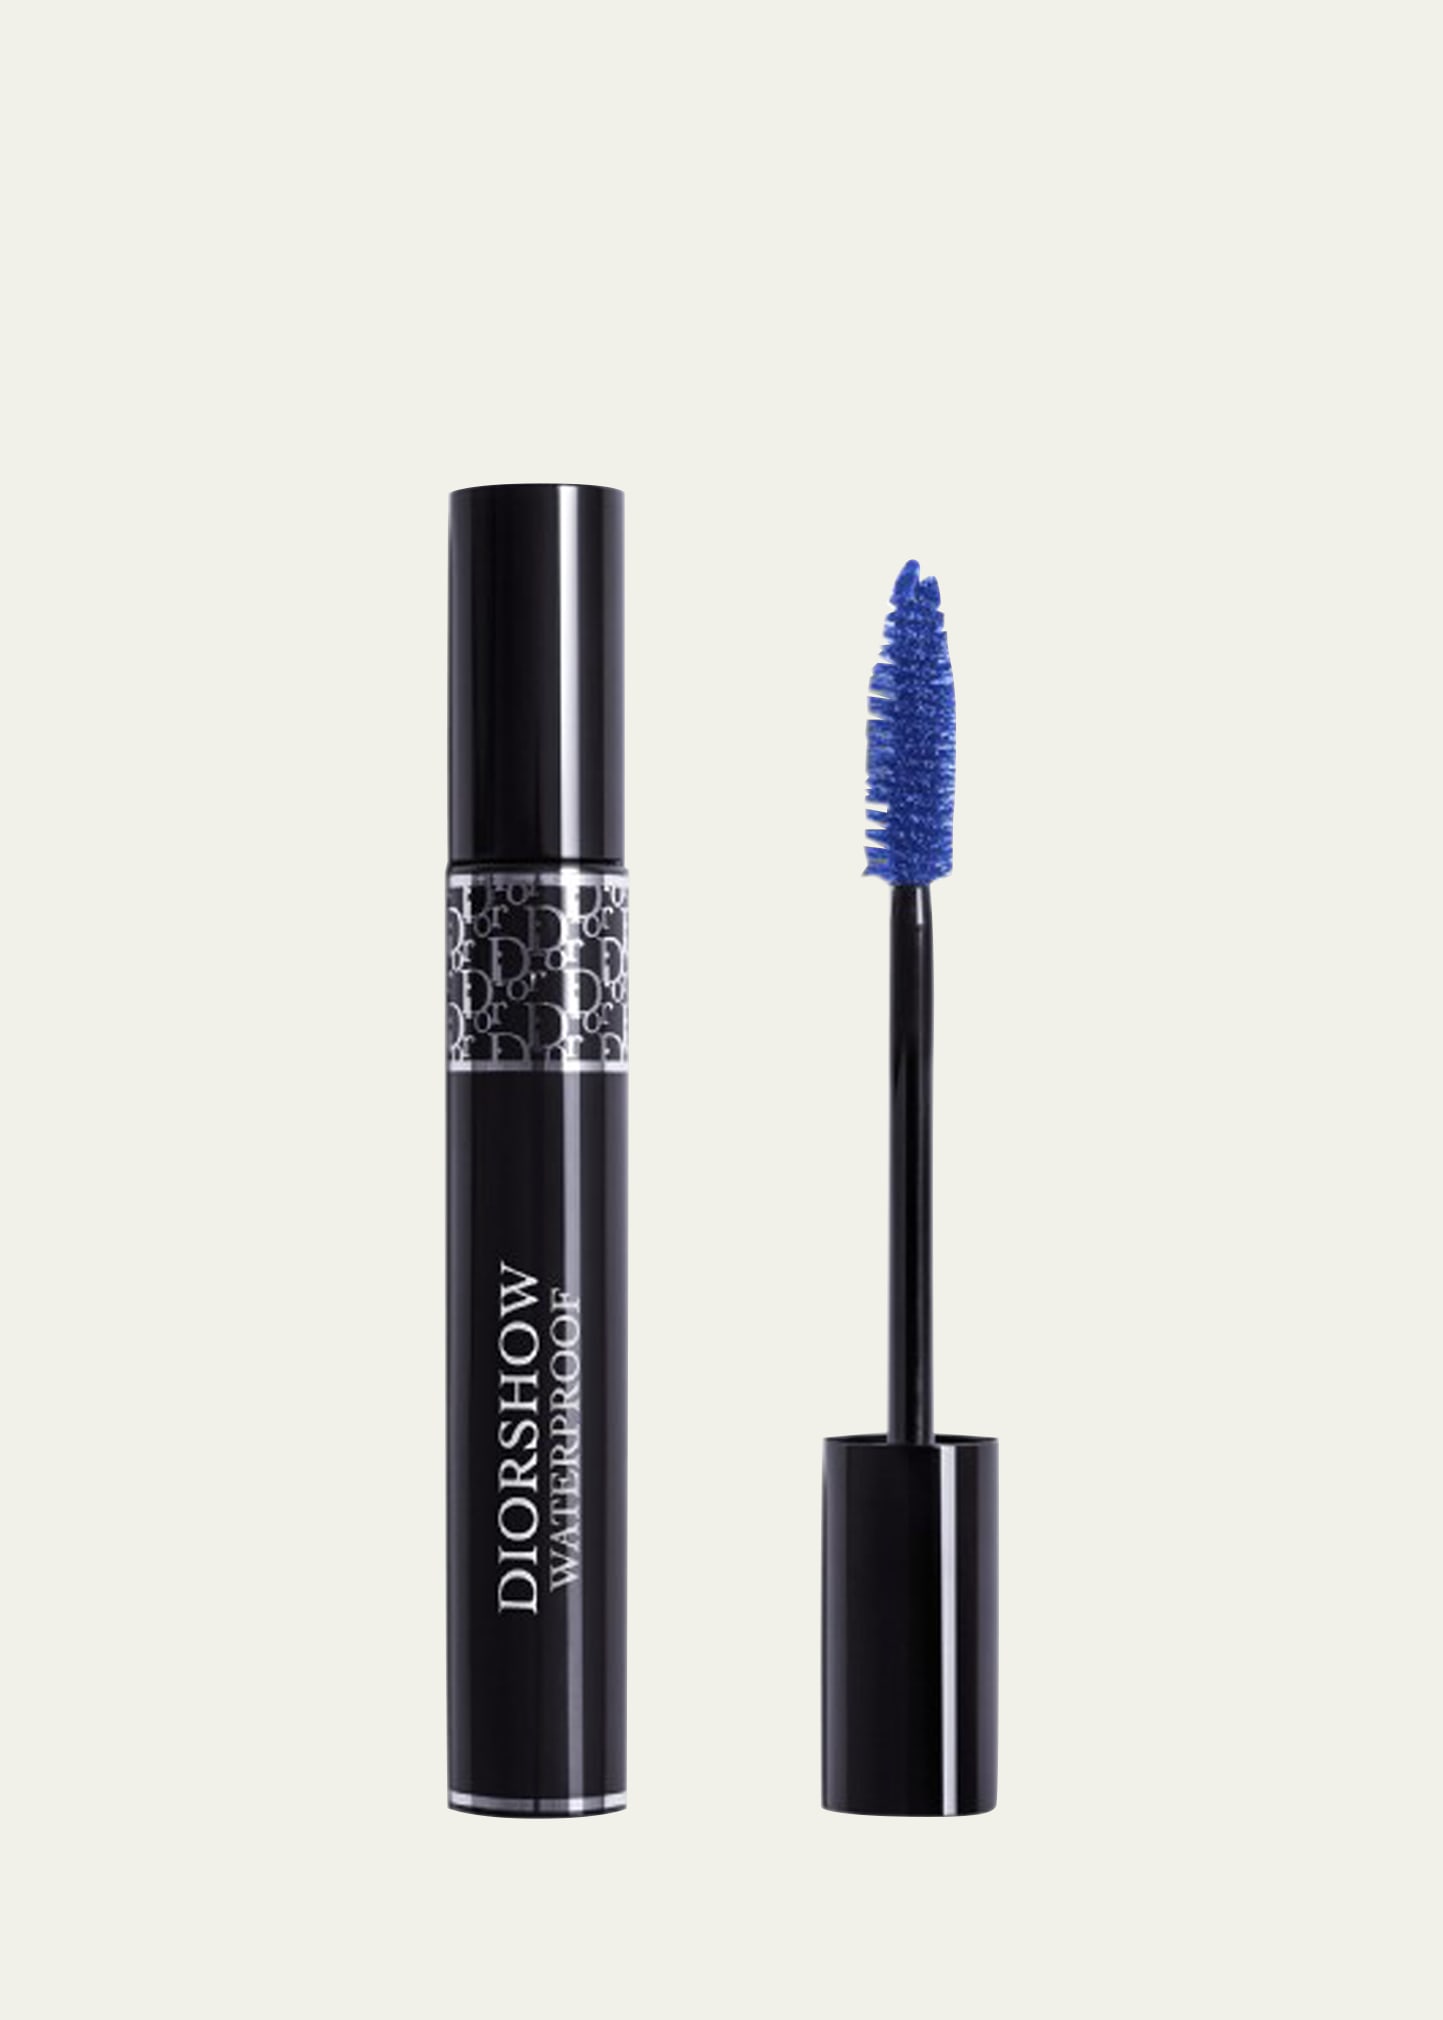 Dior Show Waterproof Mascara In Azure Blue